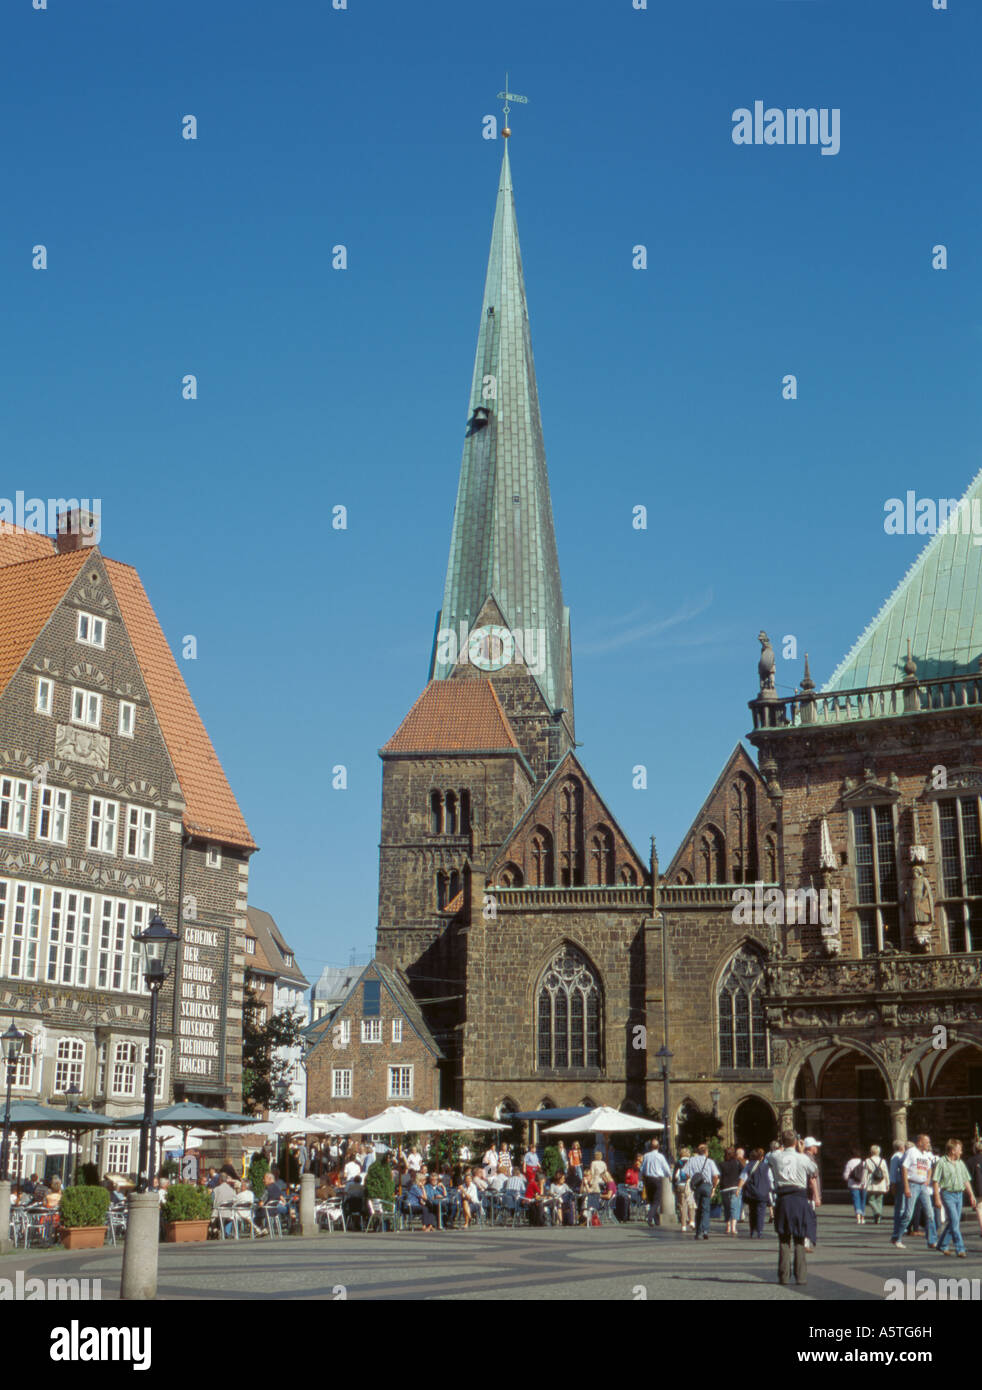 Kirche Unser Lieben Frauen seen over Marktplatz (Market Place), City of Bremen, Bremen, Germany. Stock Photo